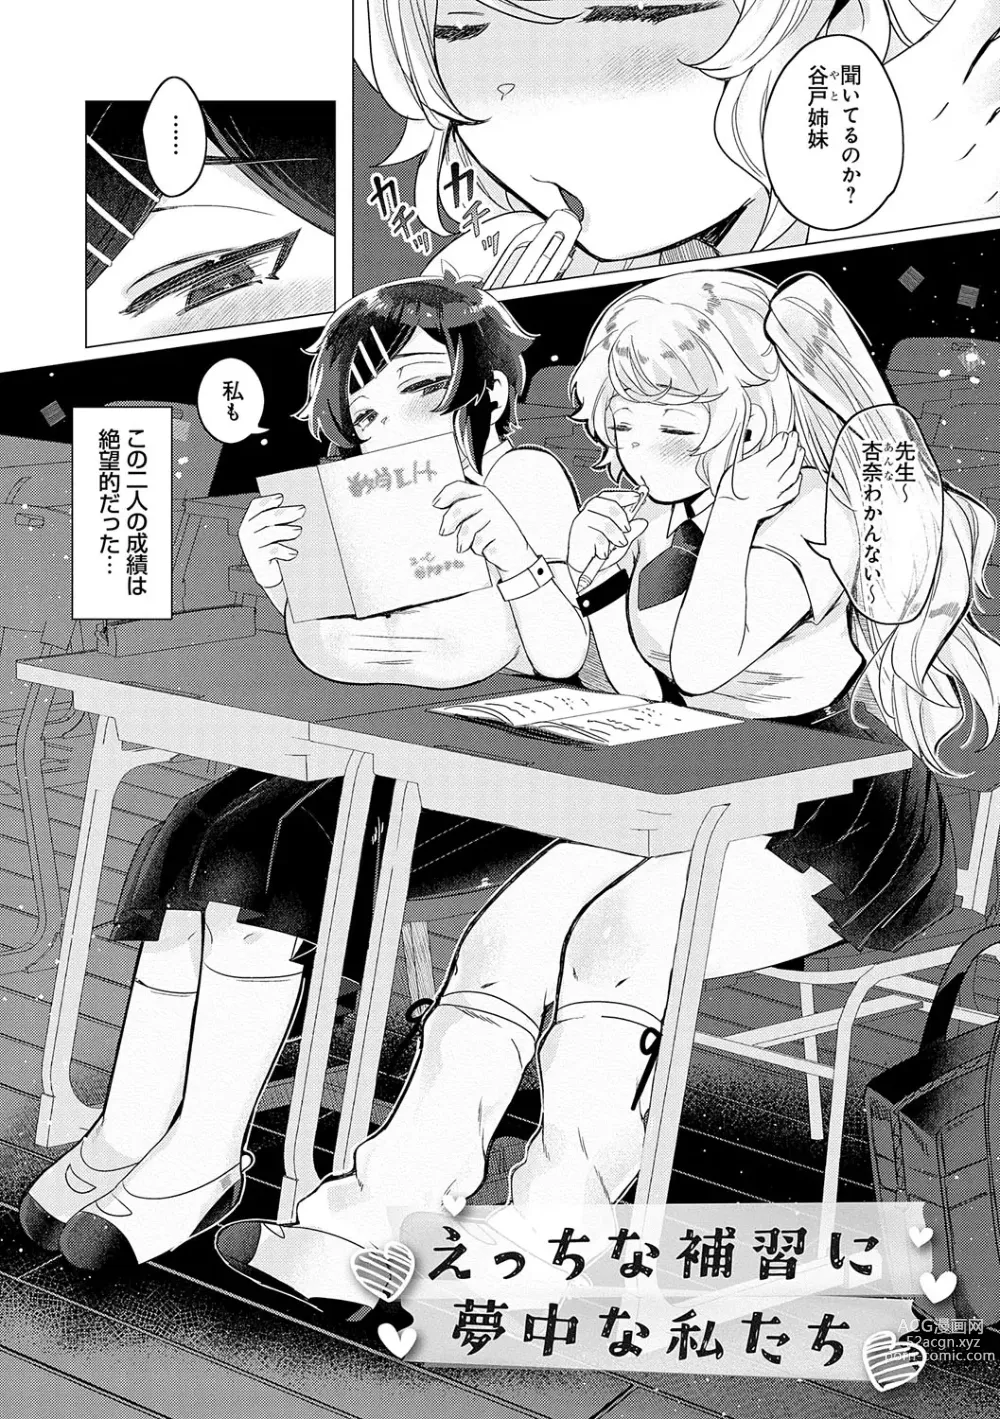 Page 4 of manga Haru biyori, koi Minori.